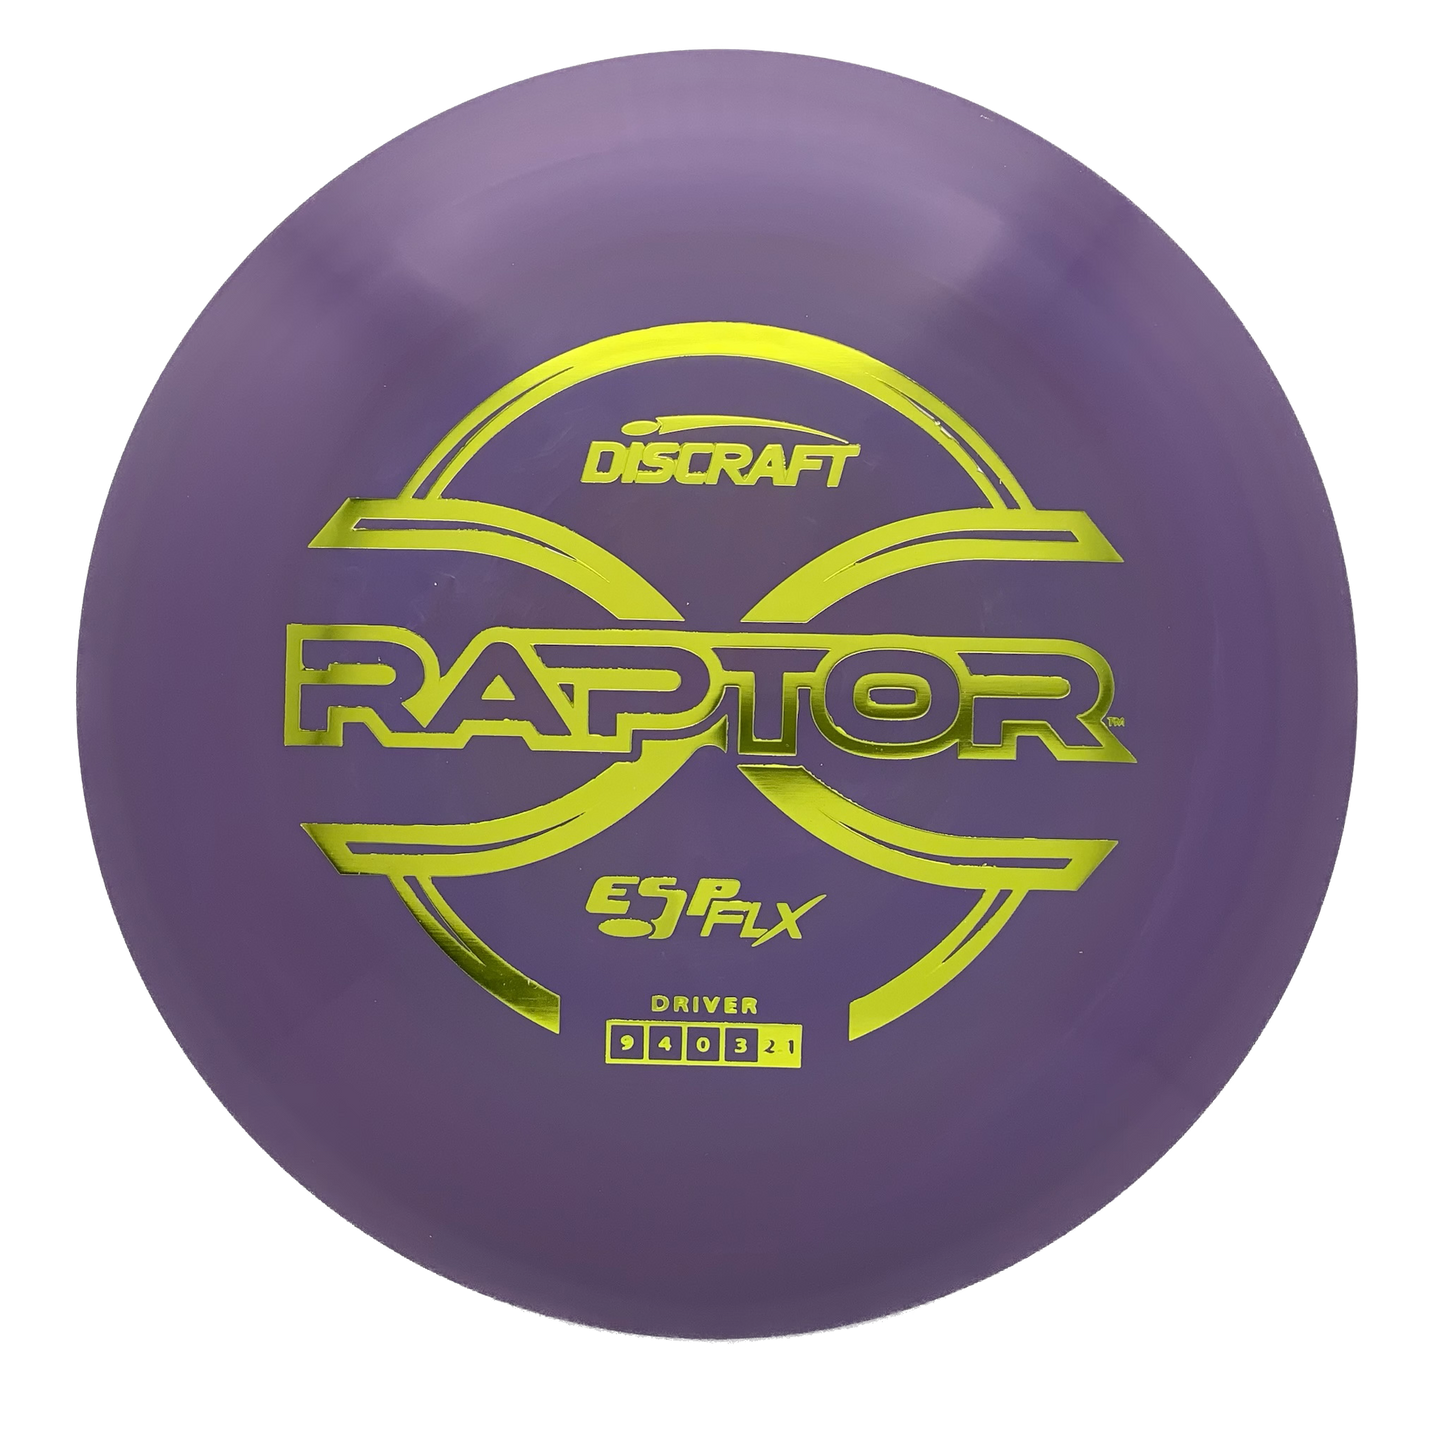 Discraft Raptor - Astro Discs TX - Houston Disc Golf